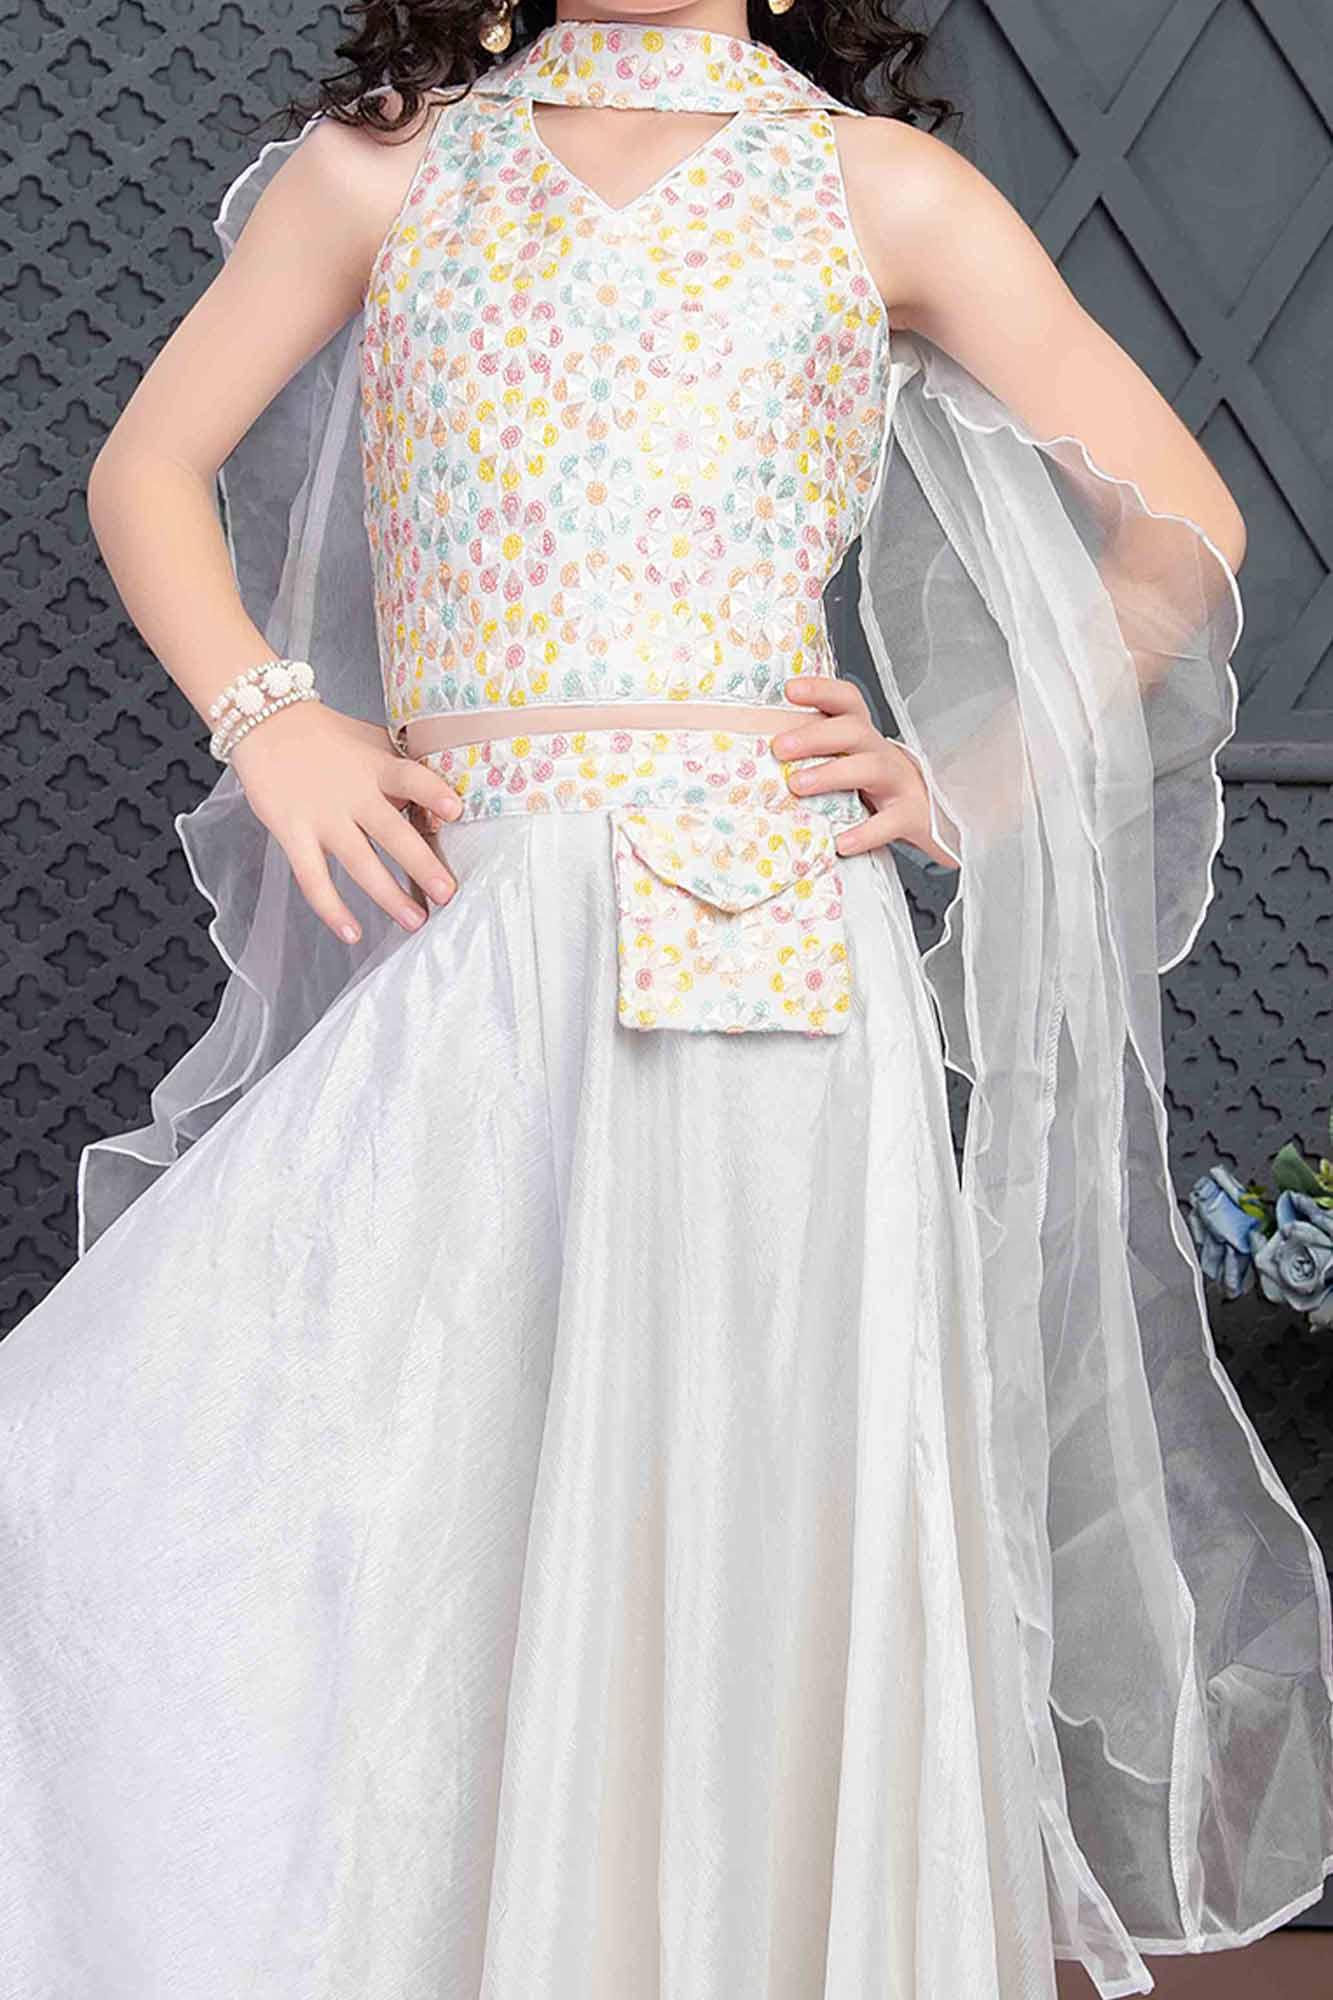 Handmade White Tail Girls Wedding Dress, Toddler Photoshoot Birthday Dress  - Etsy | Wedding dresses for girls, White flower girl dresses, Handmade  flower girl dress